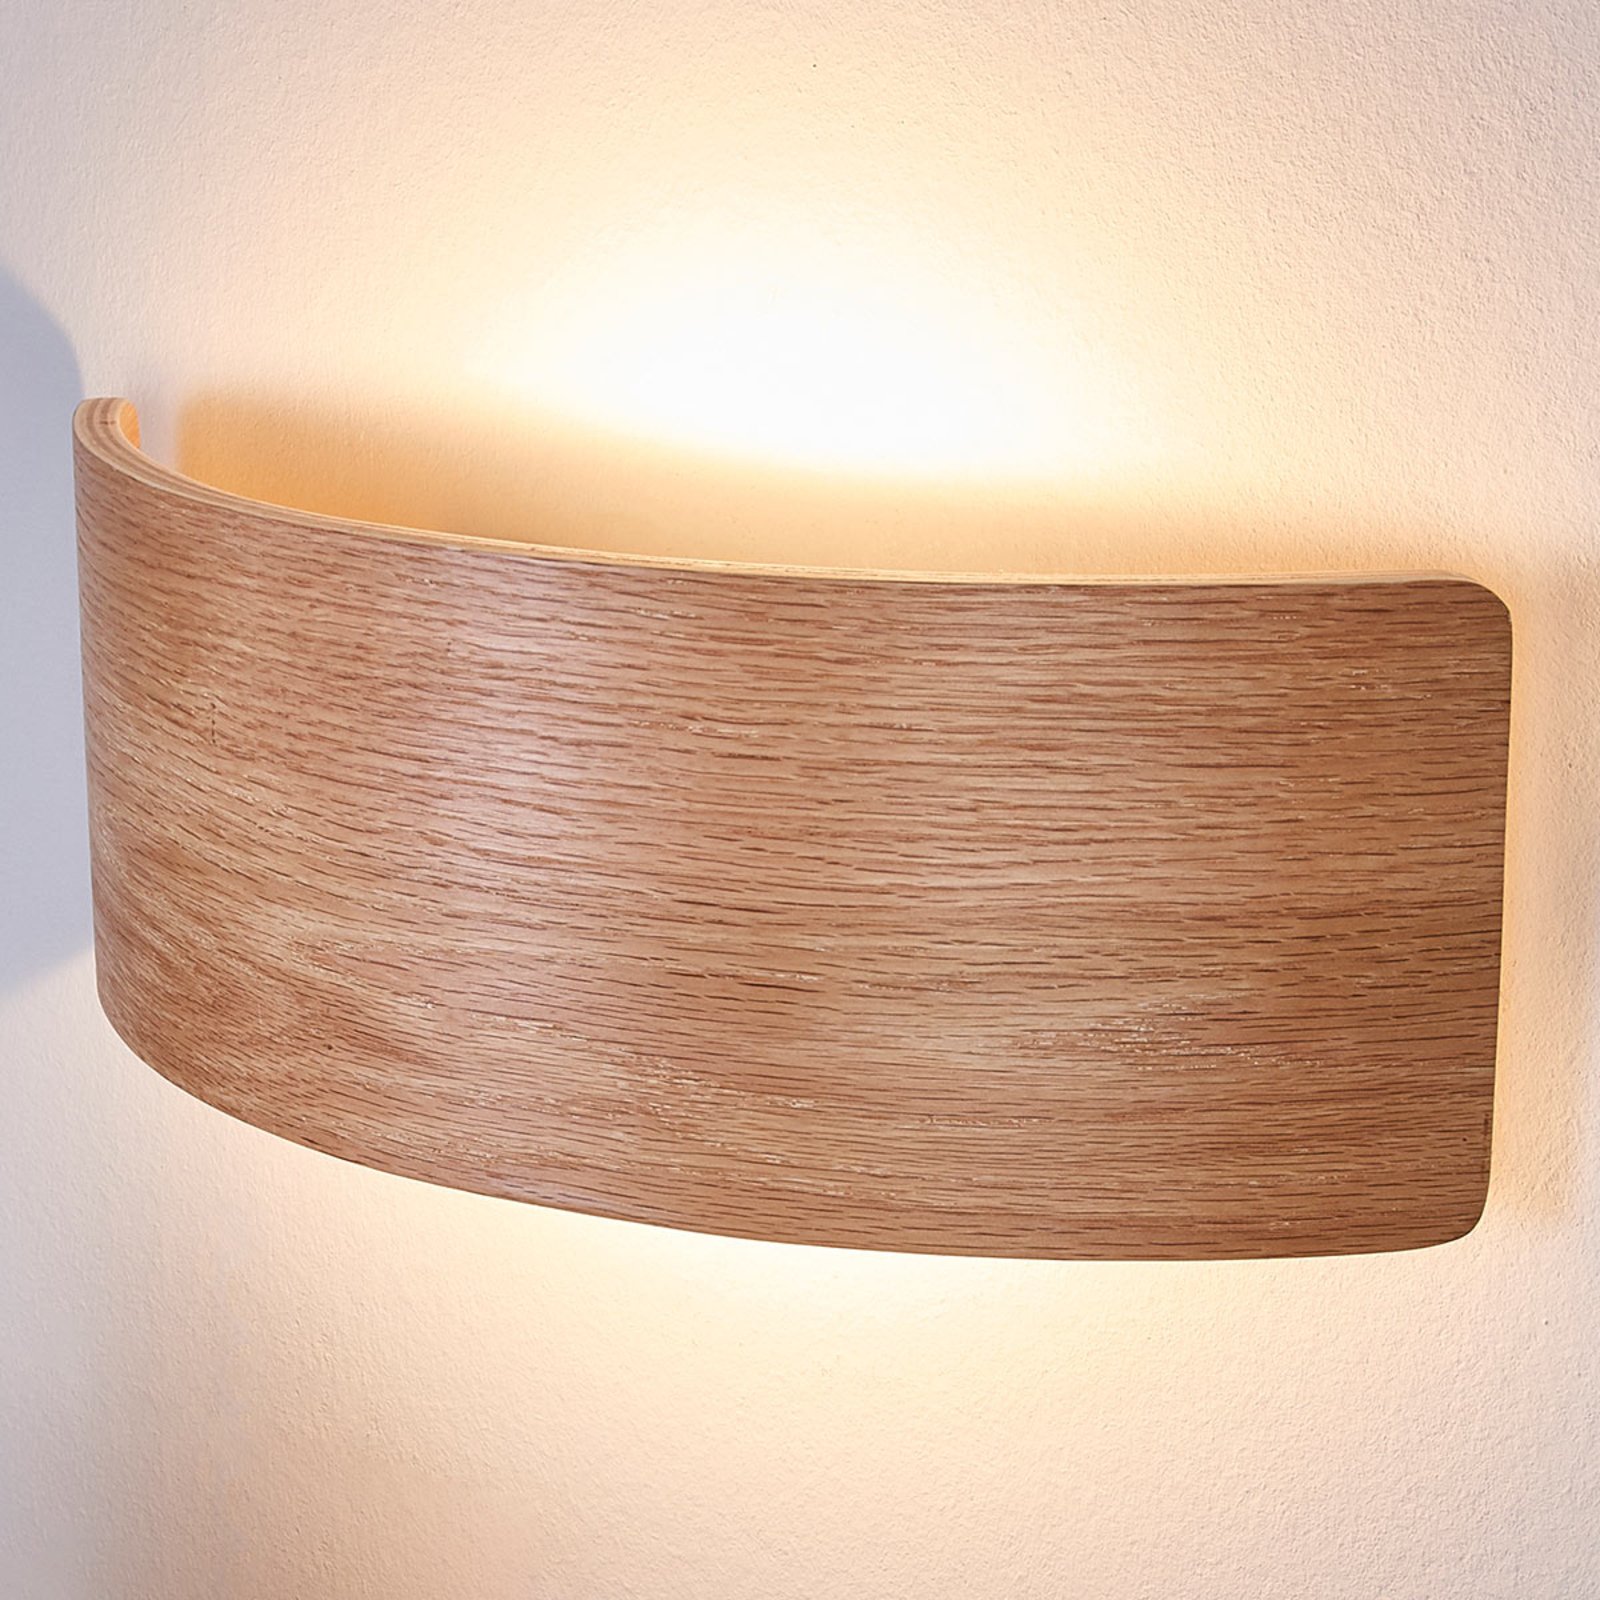 Rafailia LED wall light 33 cm, wood